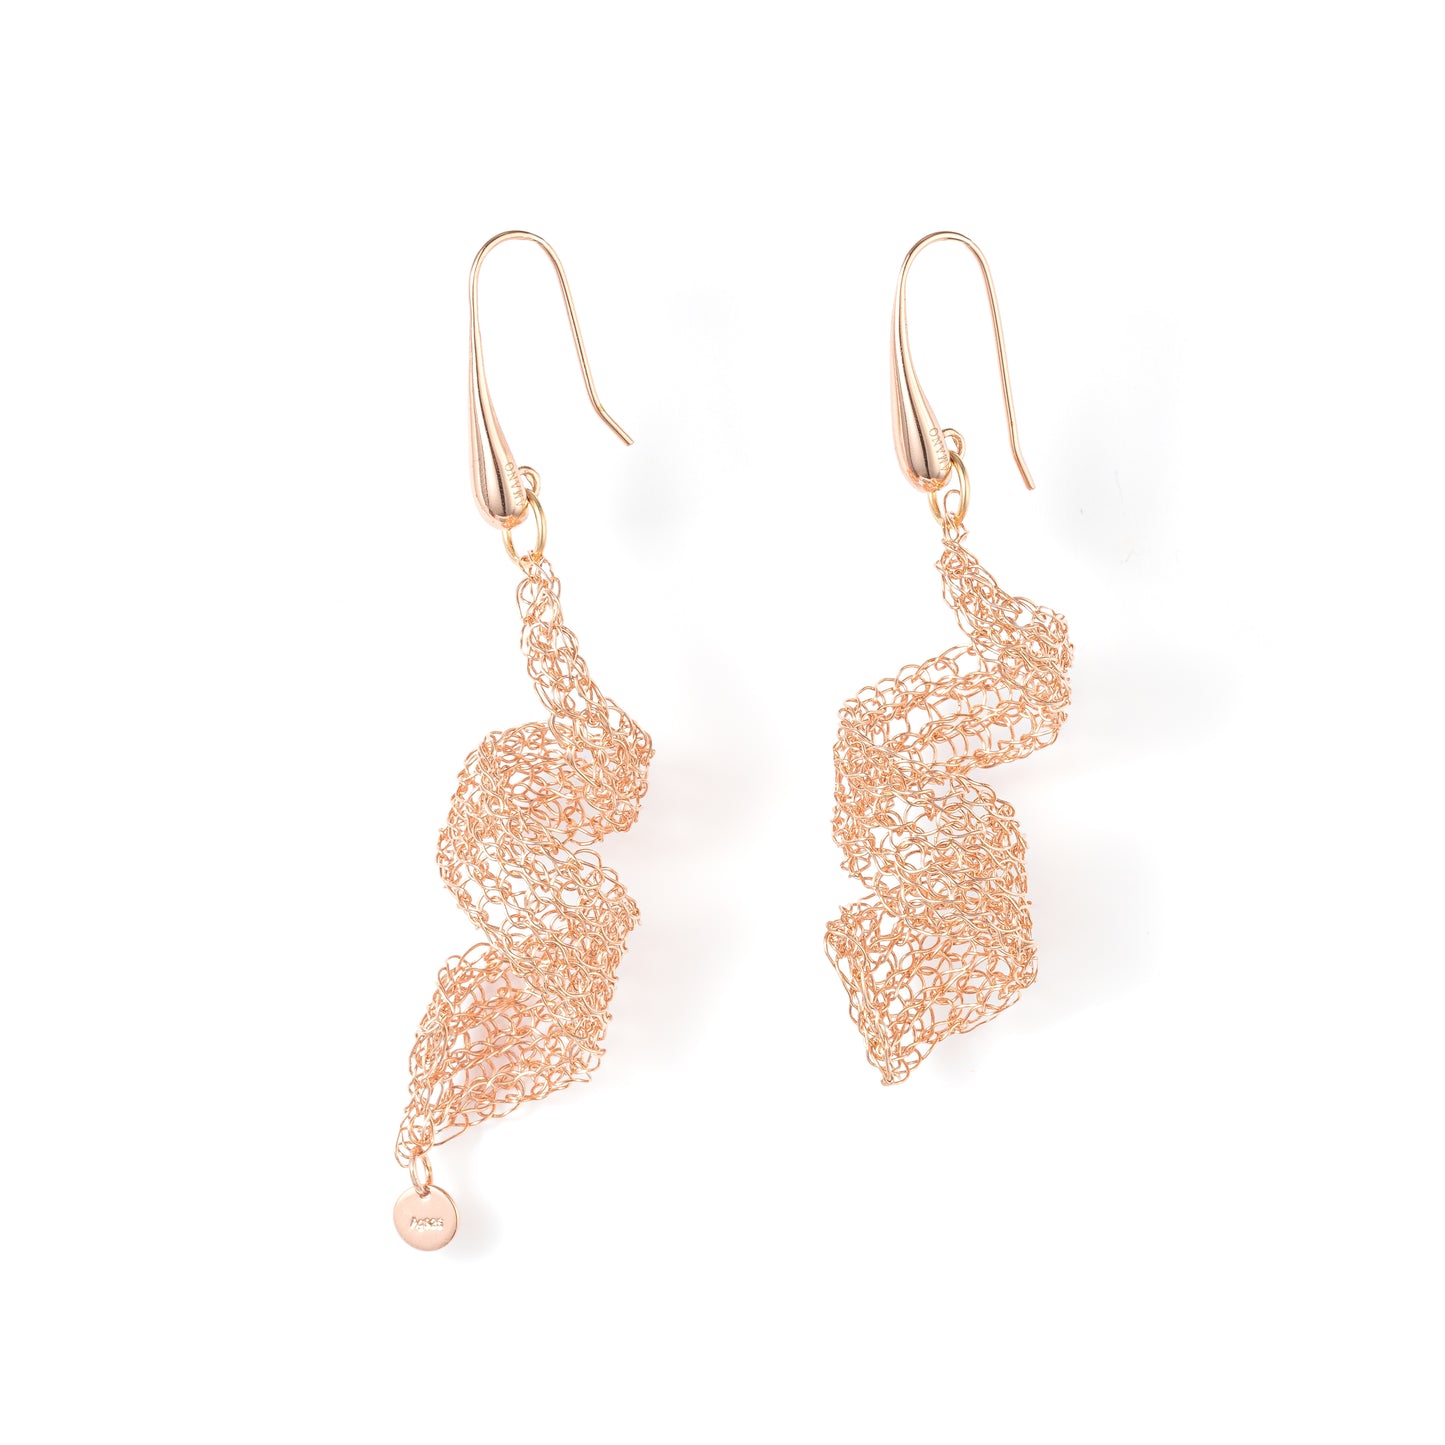 Chasing Light Series - Rose Gold Wave Earrings